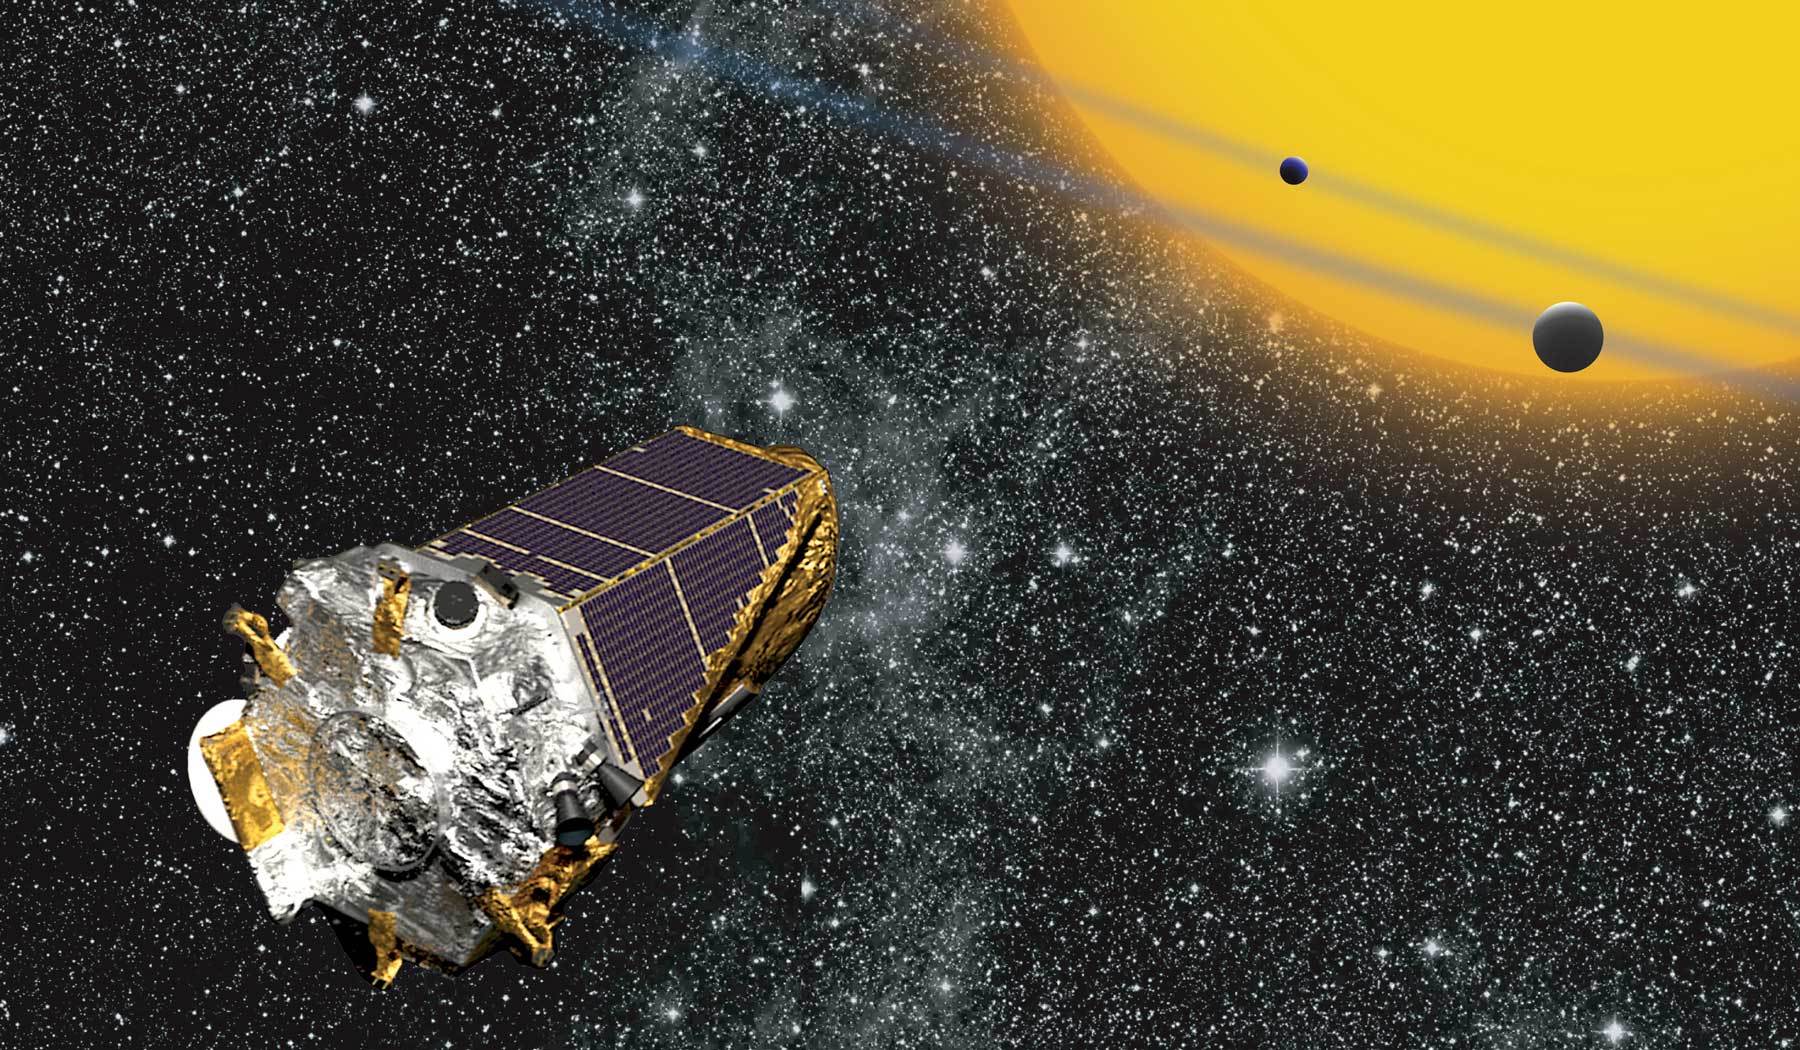 An artist's illustration of the exoplanet Kepler-452b.